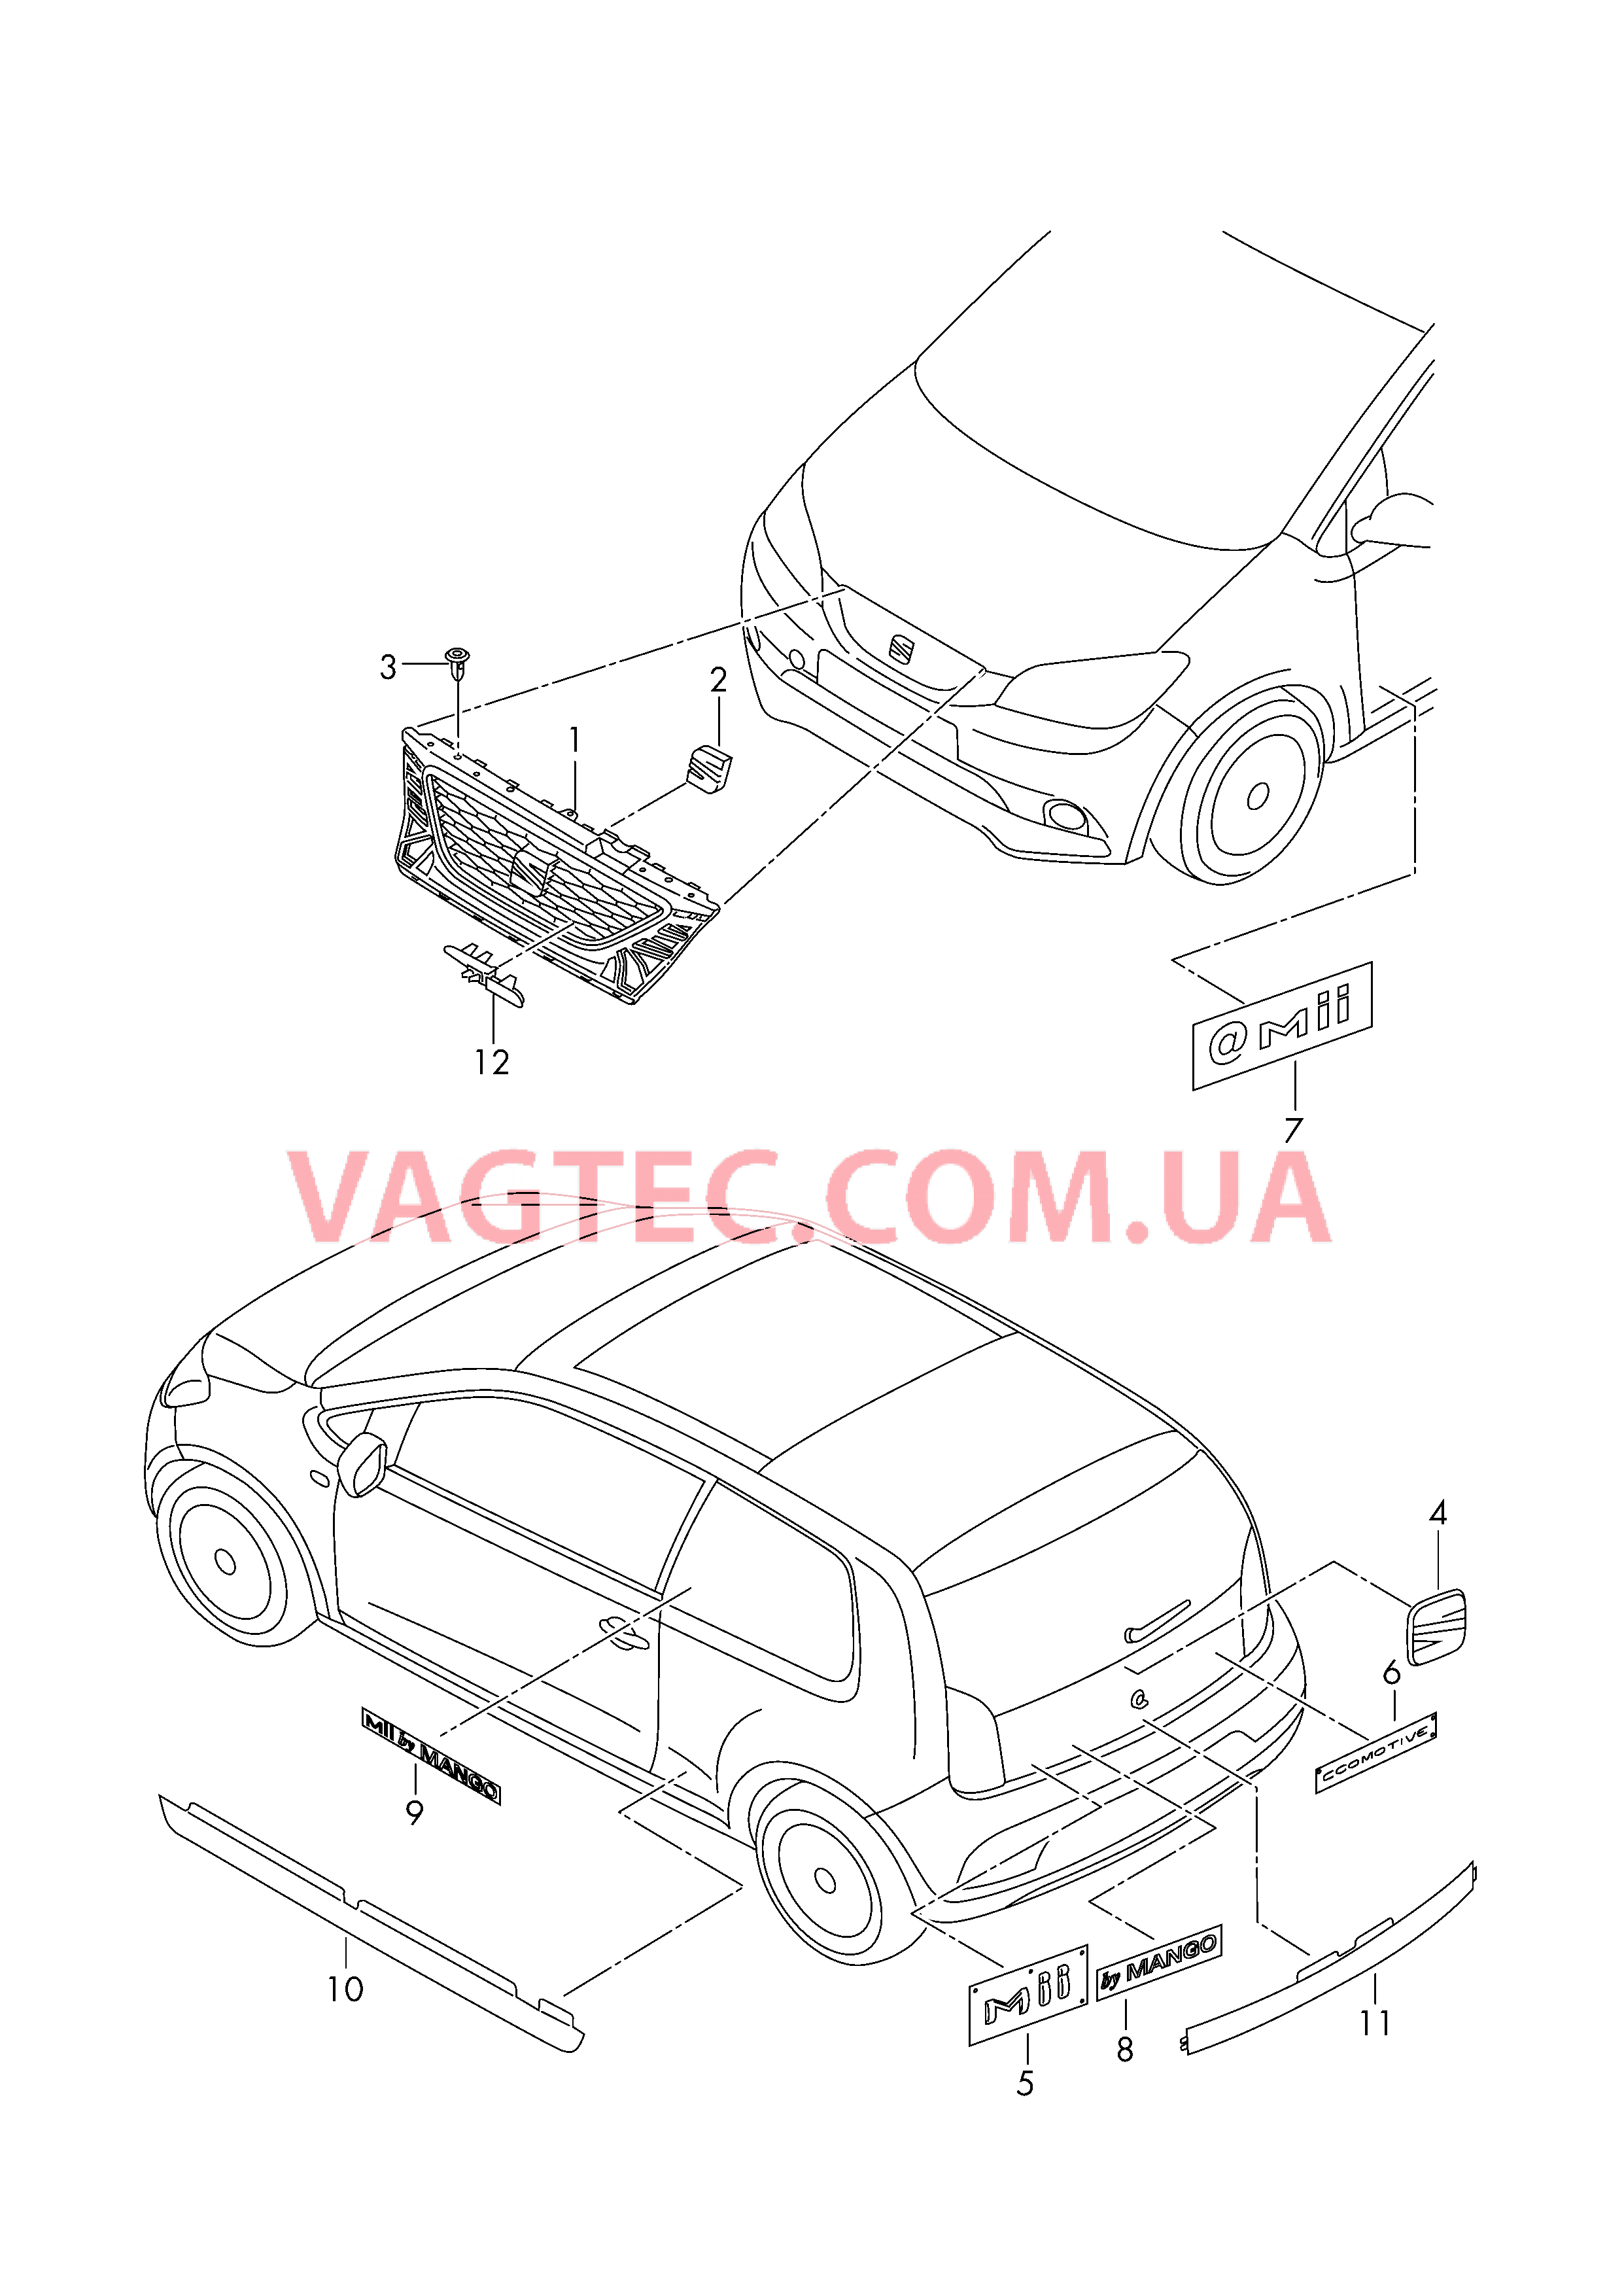 Решётка радиатора Надписи Брелок  для SEAT MI 2016